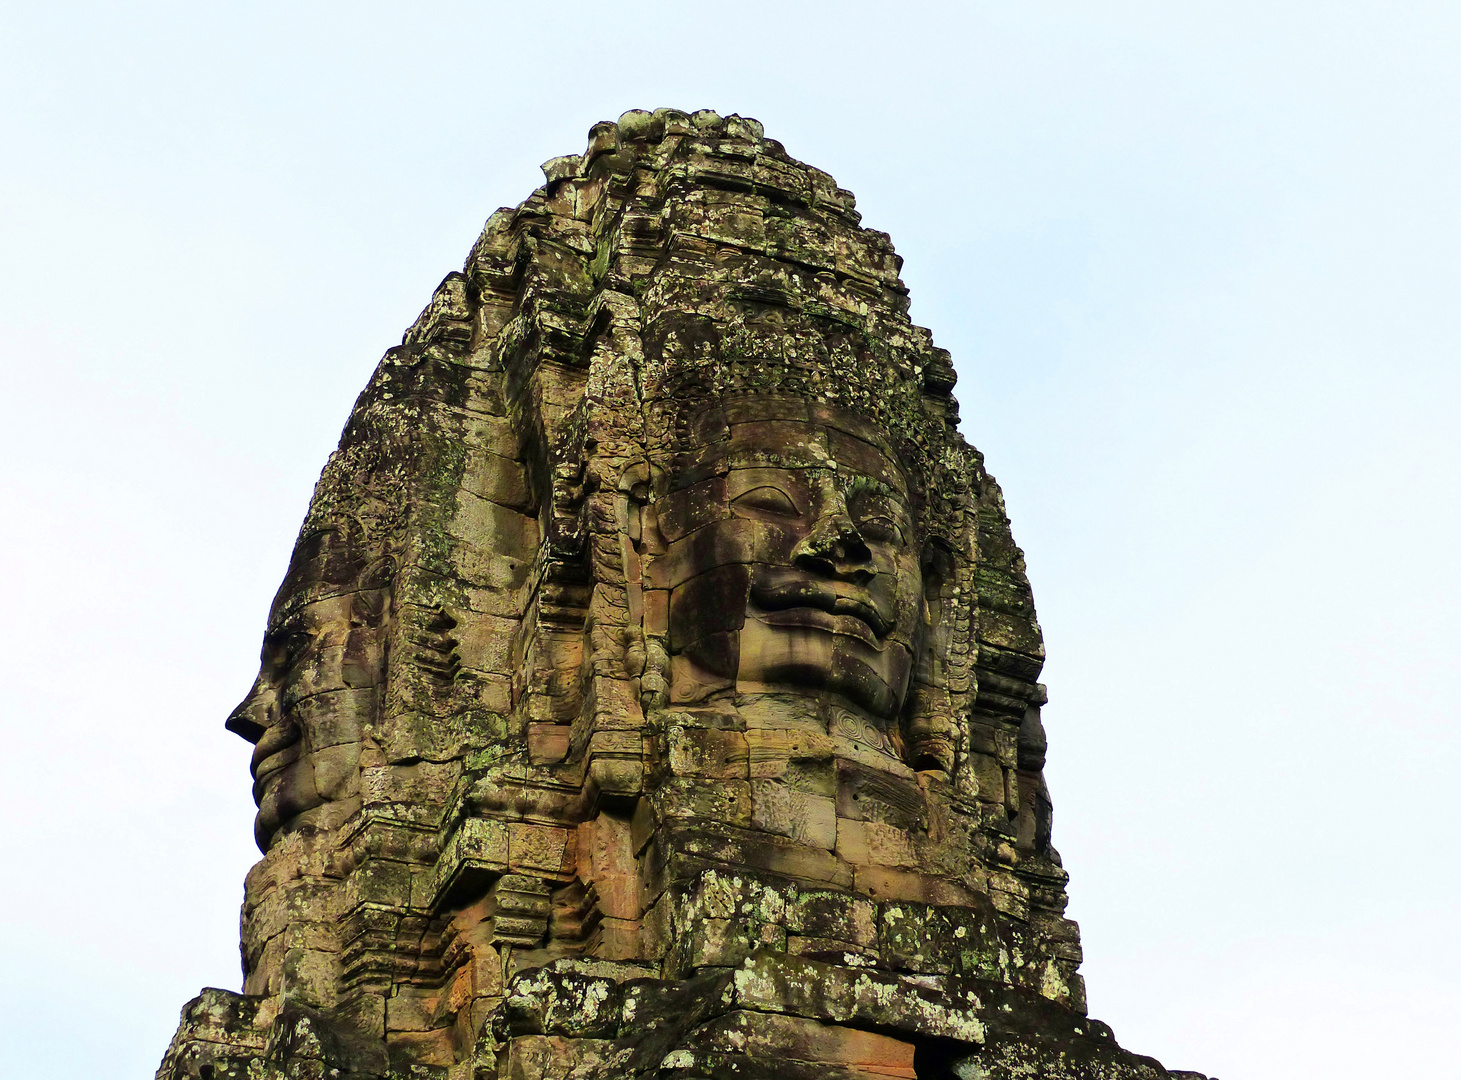 einzigartig: Gesichterturm, Bayon, Angkor Thom, Kambodscha 2016